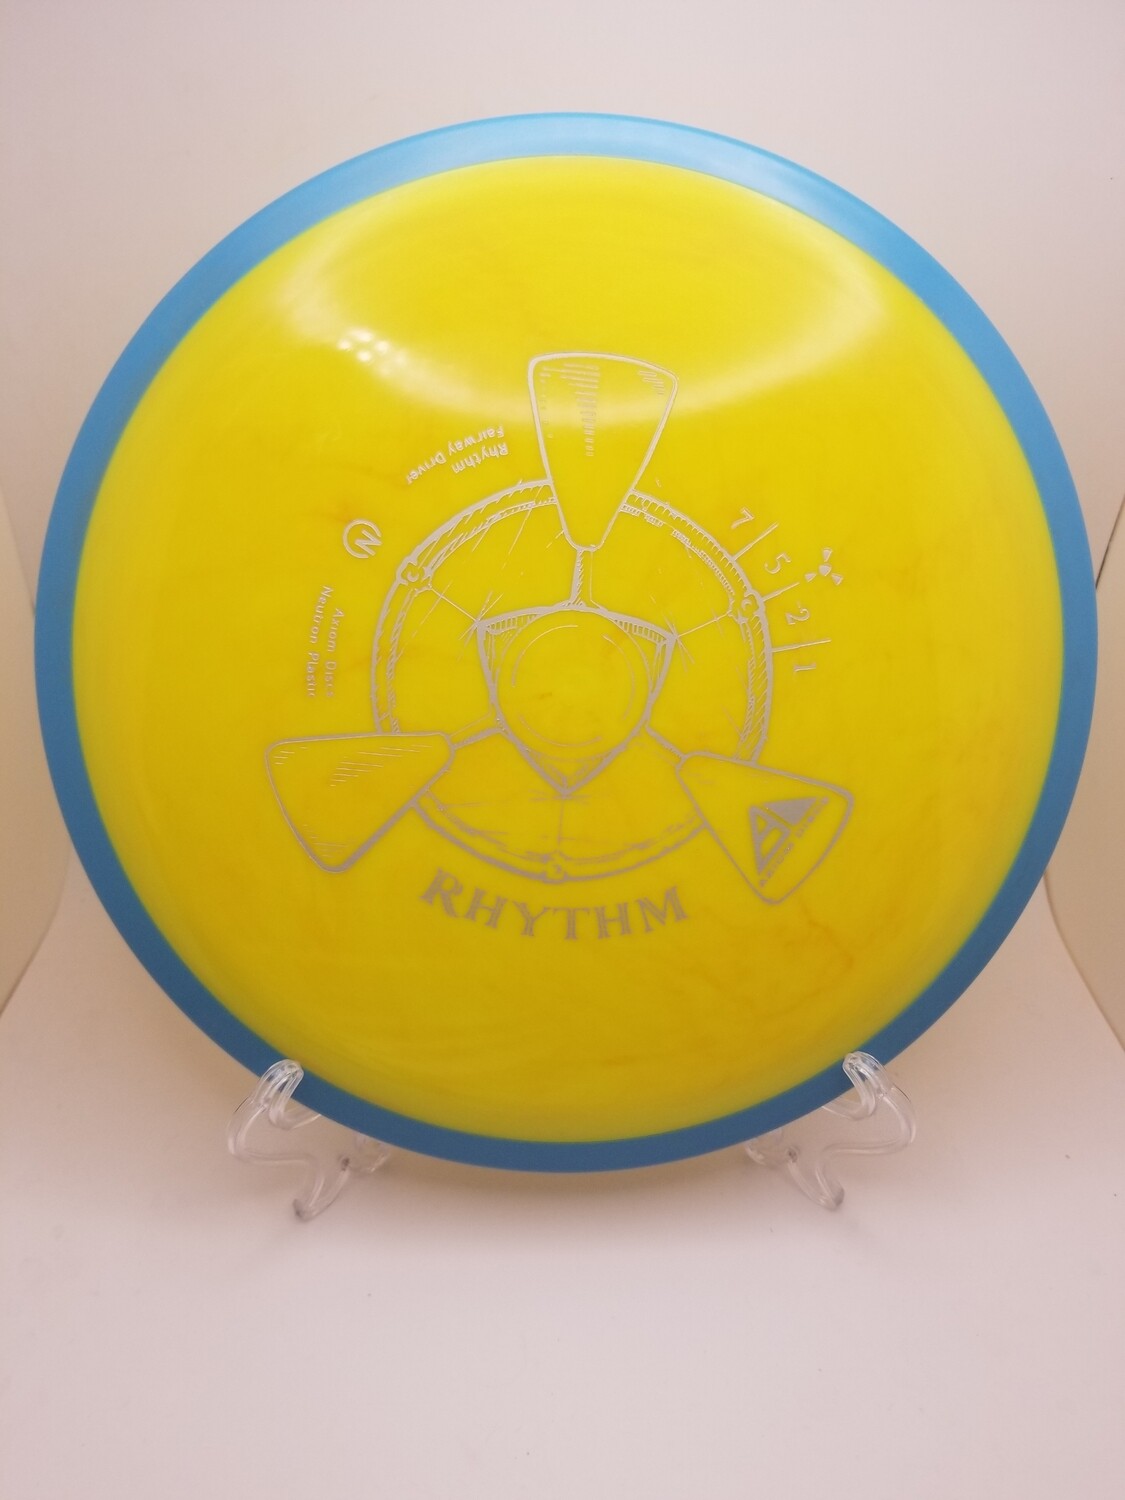 Axiom Discs Rhythm Yellow/orange with blue green rim Stamped Neutron 171g